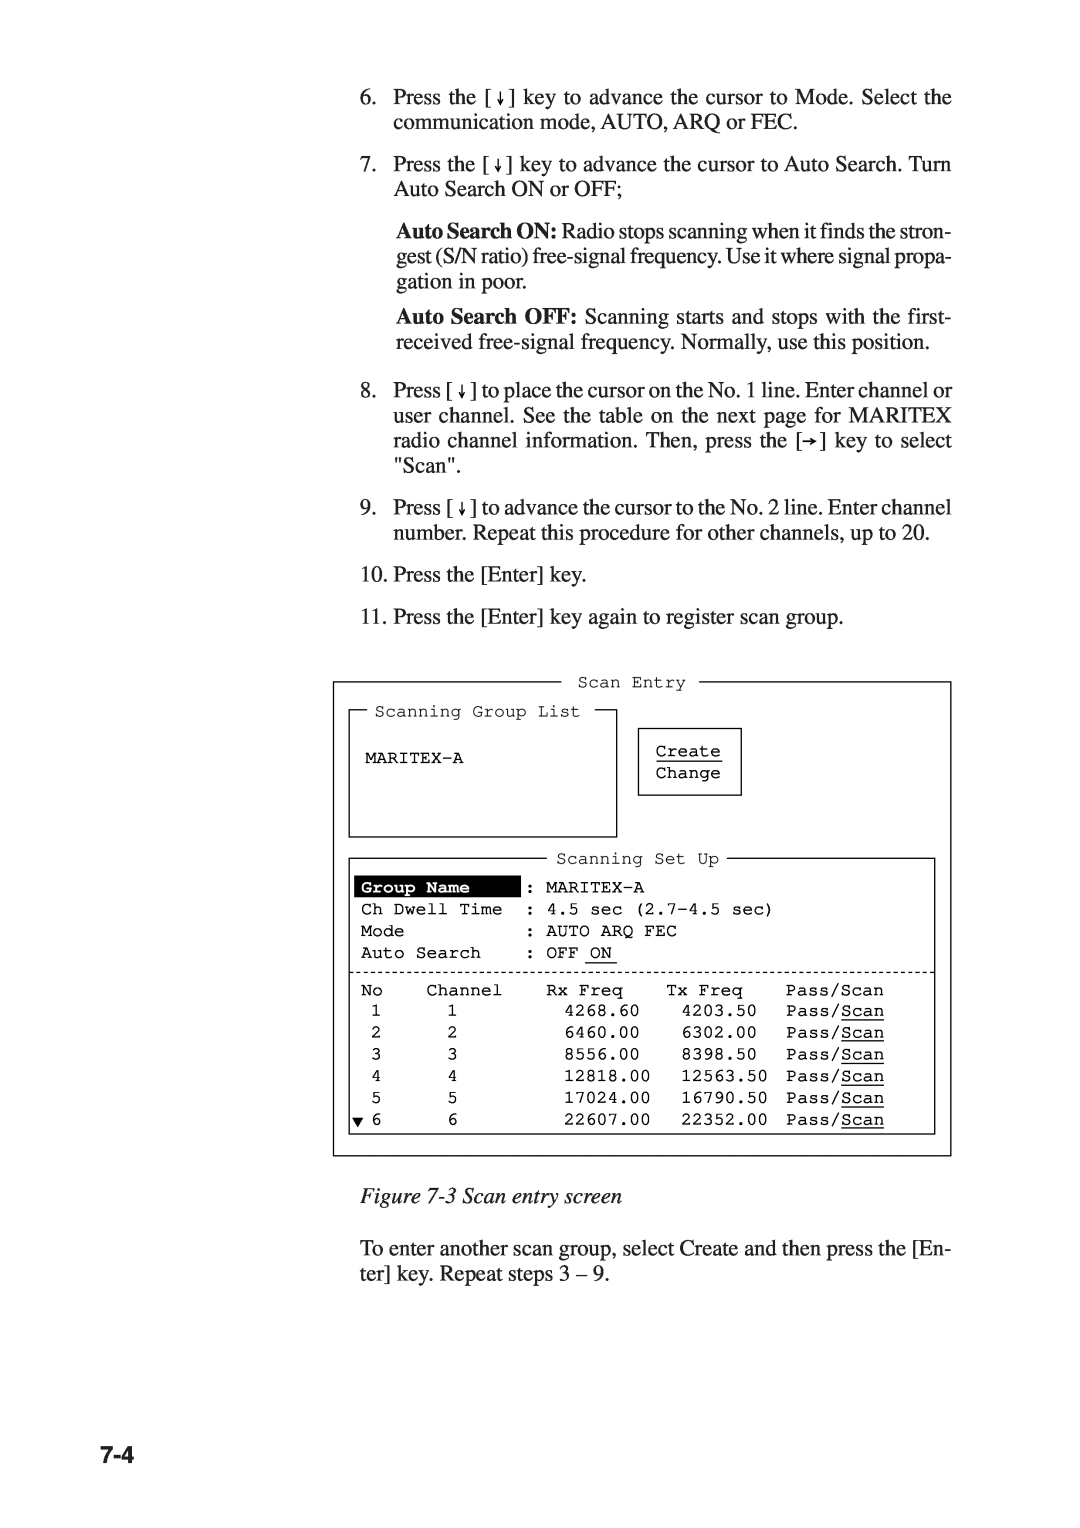 Furuno RC-1500-1T manual 3 Scan entry screen, Press the Enter key 